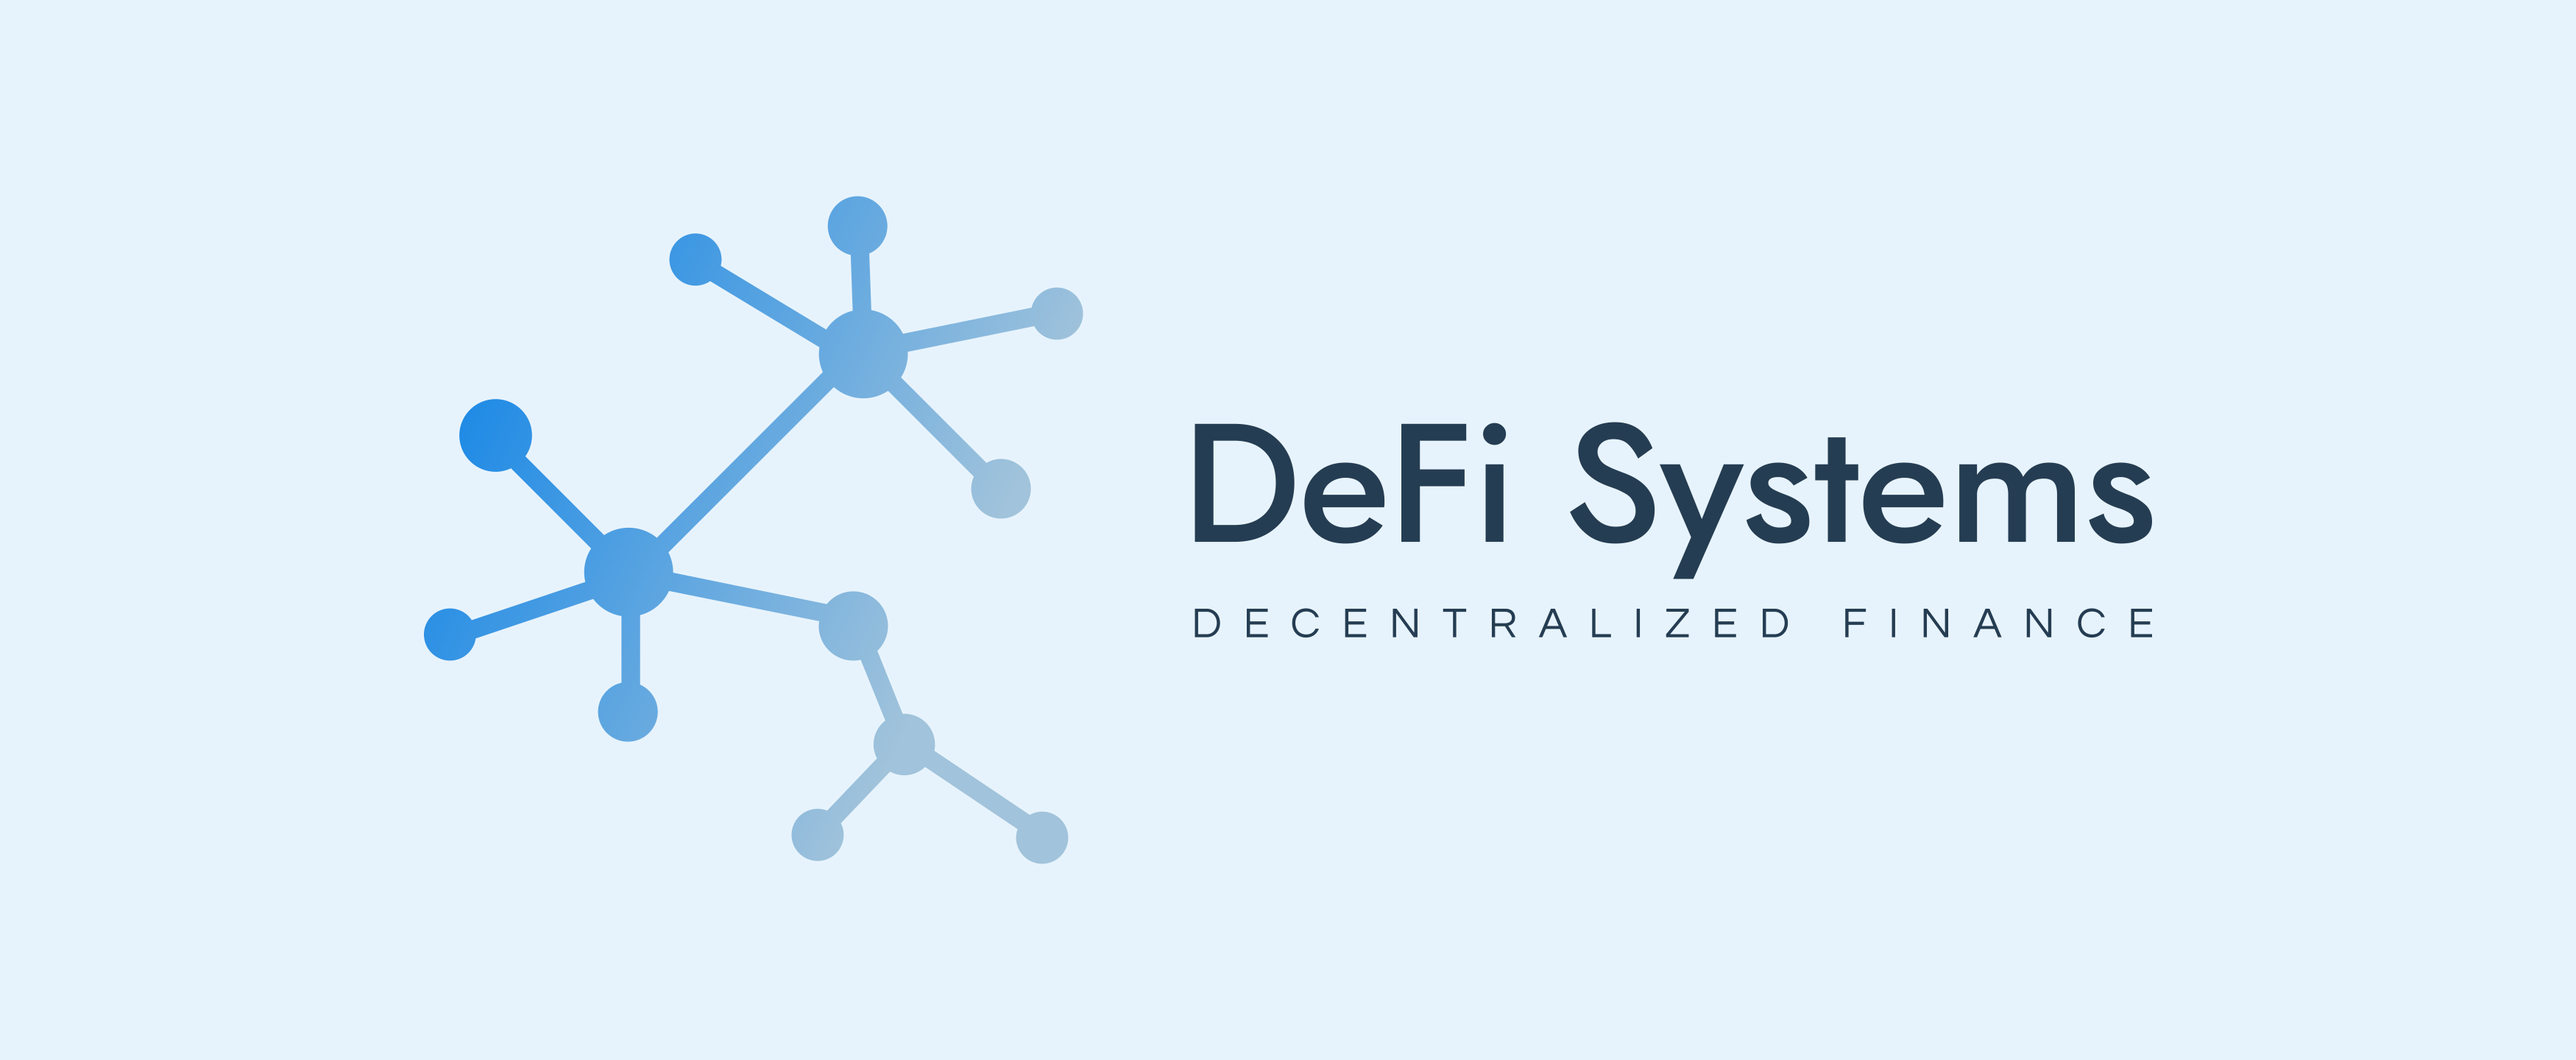 DeFi Systems